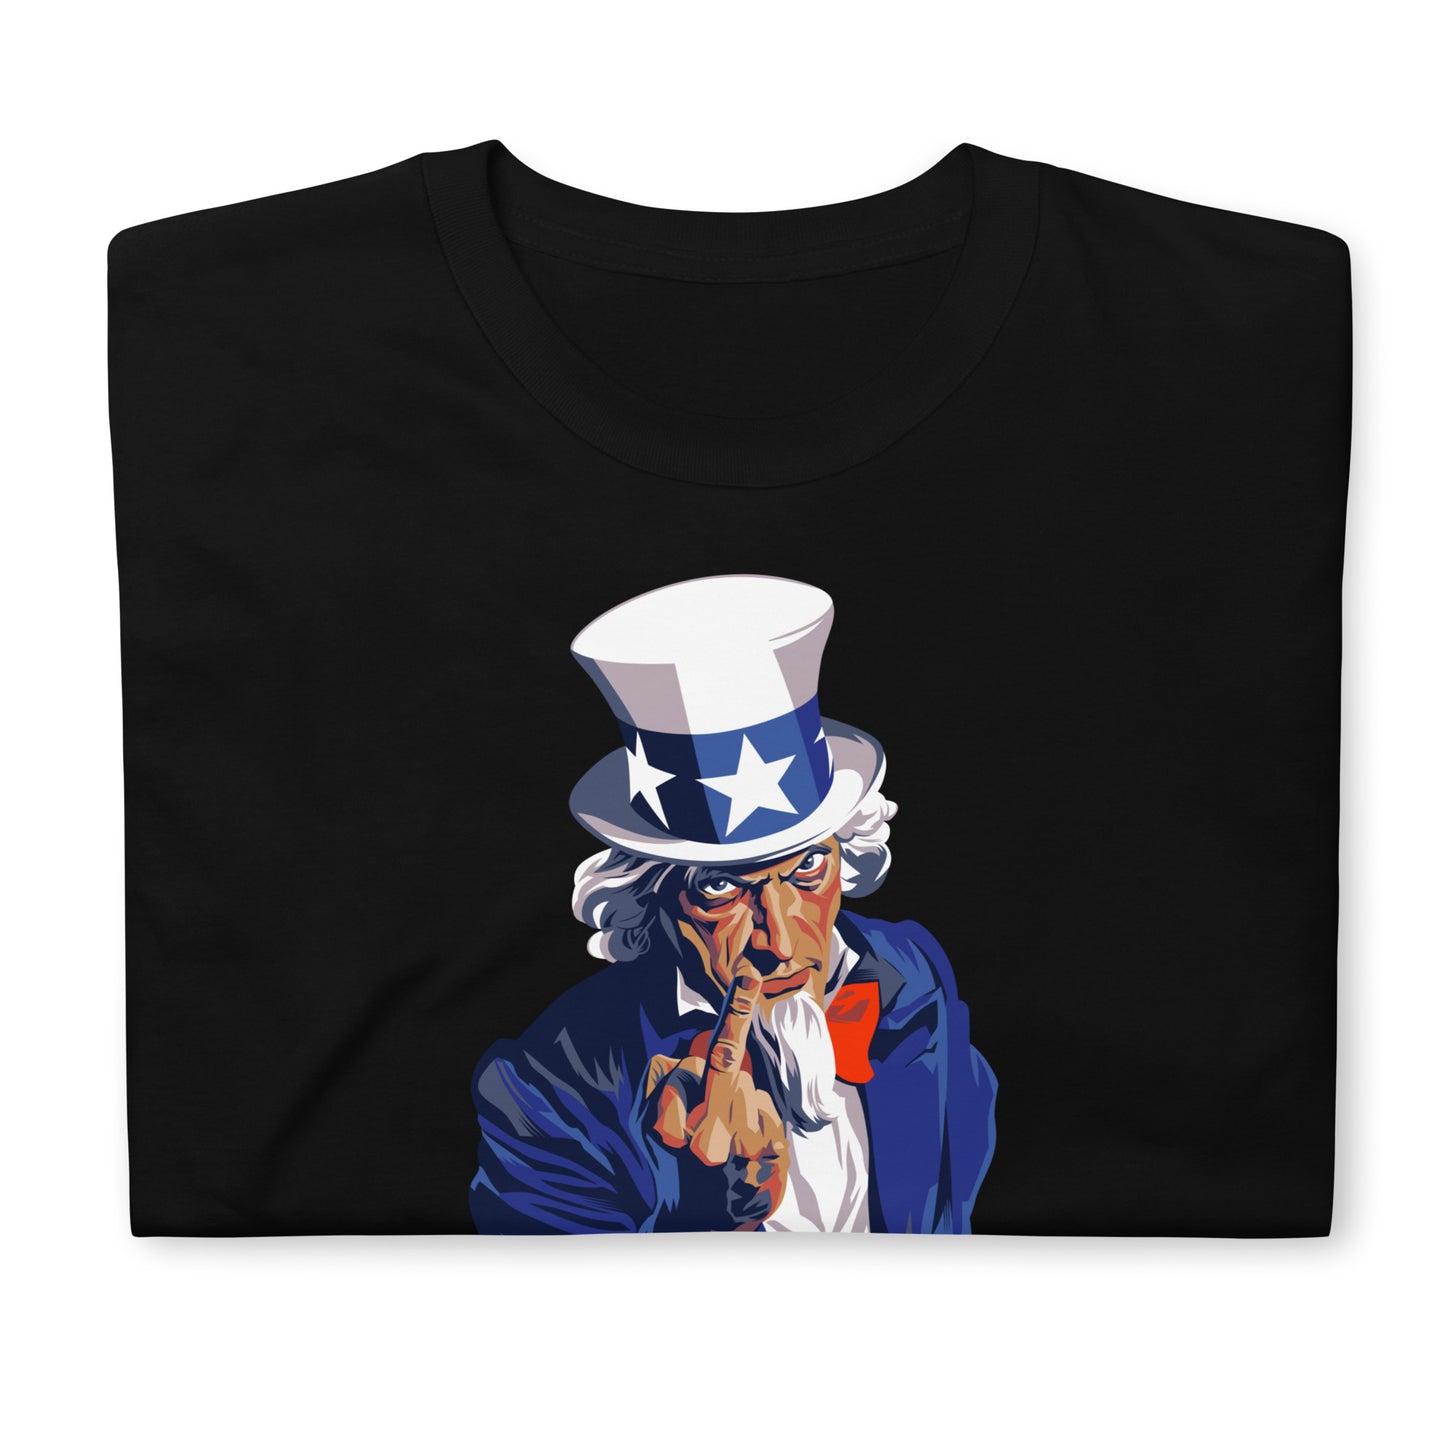 I Need You, Uncle Sam, Pop Culture Unisex T-Shirt